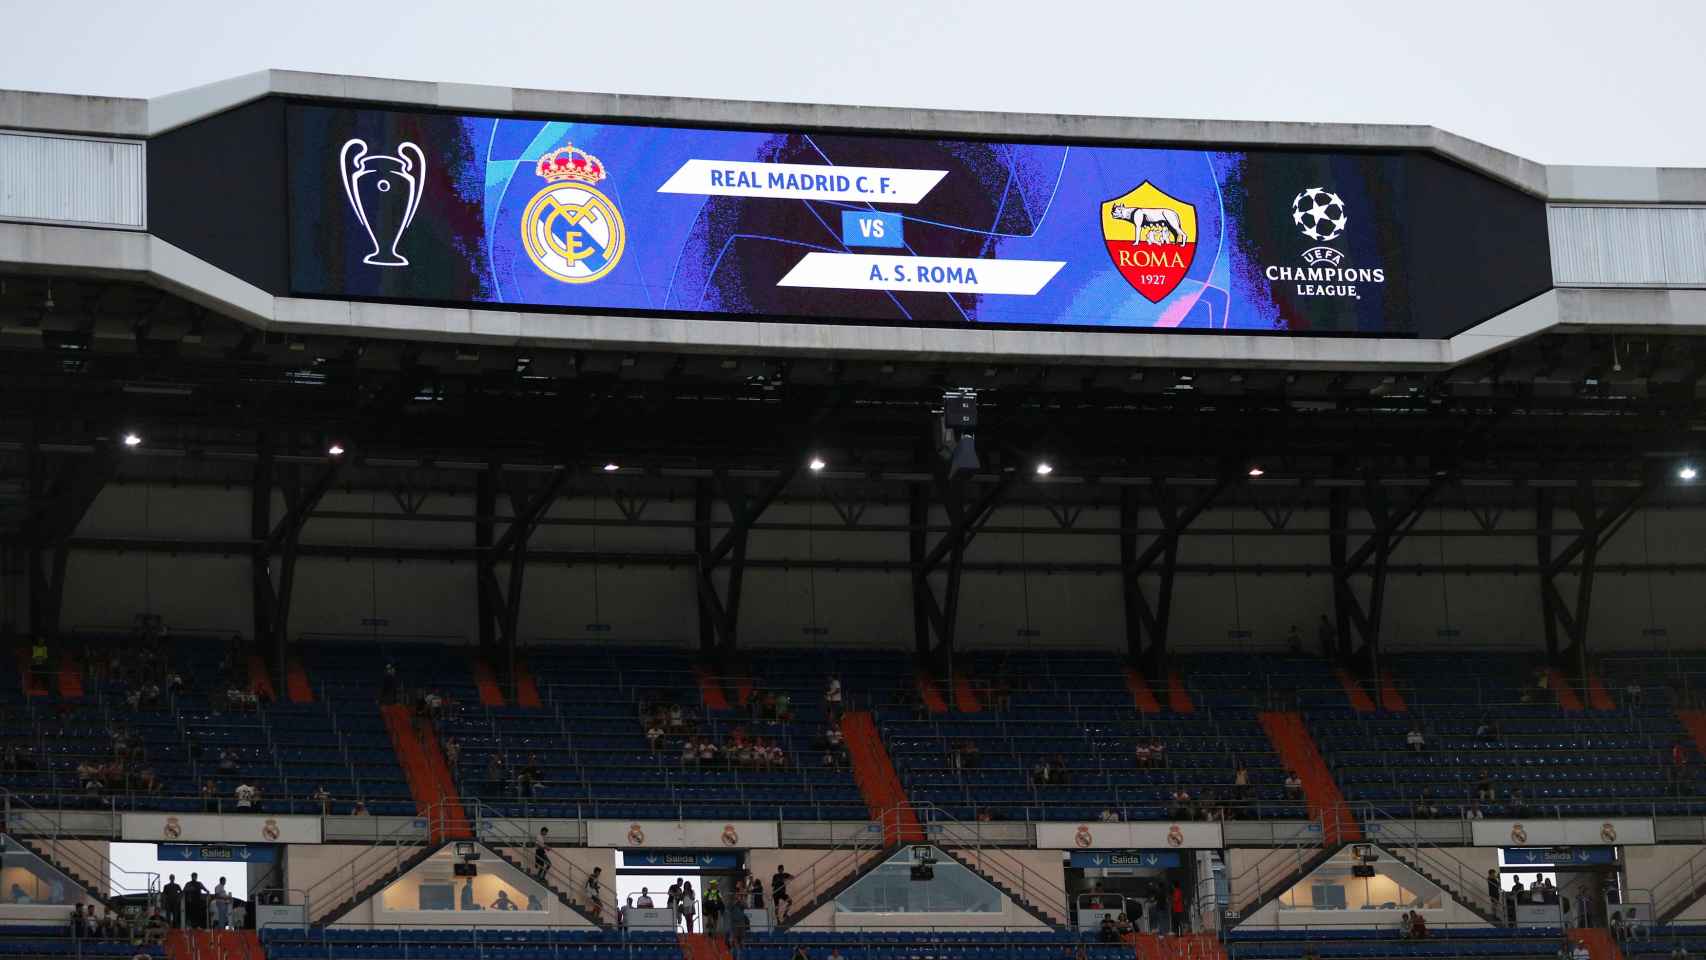 Estadio Santiago Bernabéu - Real Madrid vs AS Roma